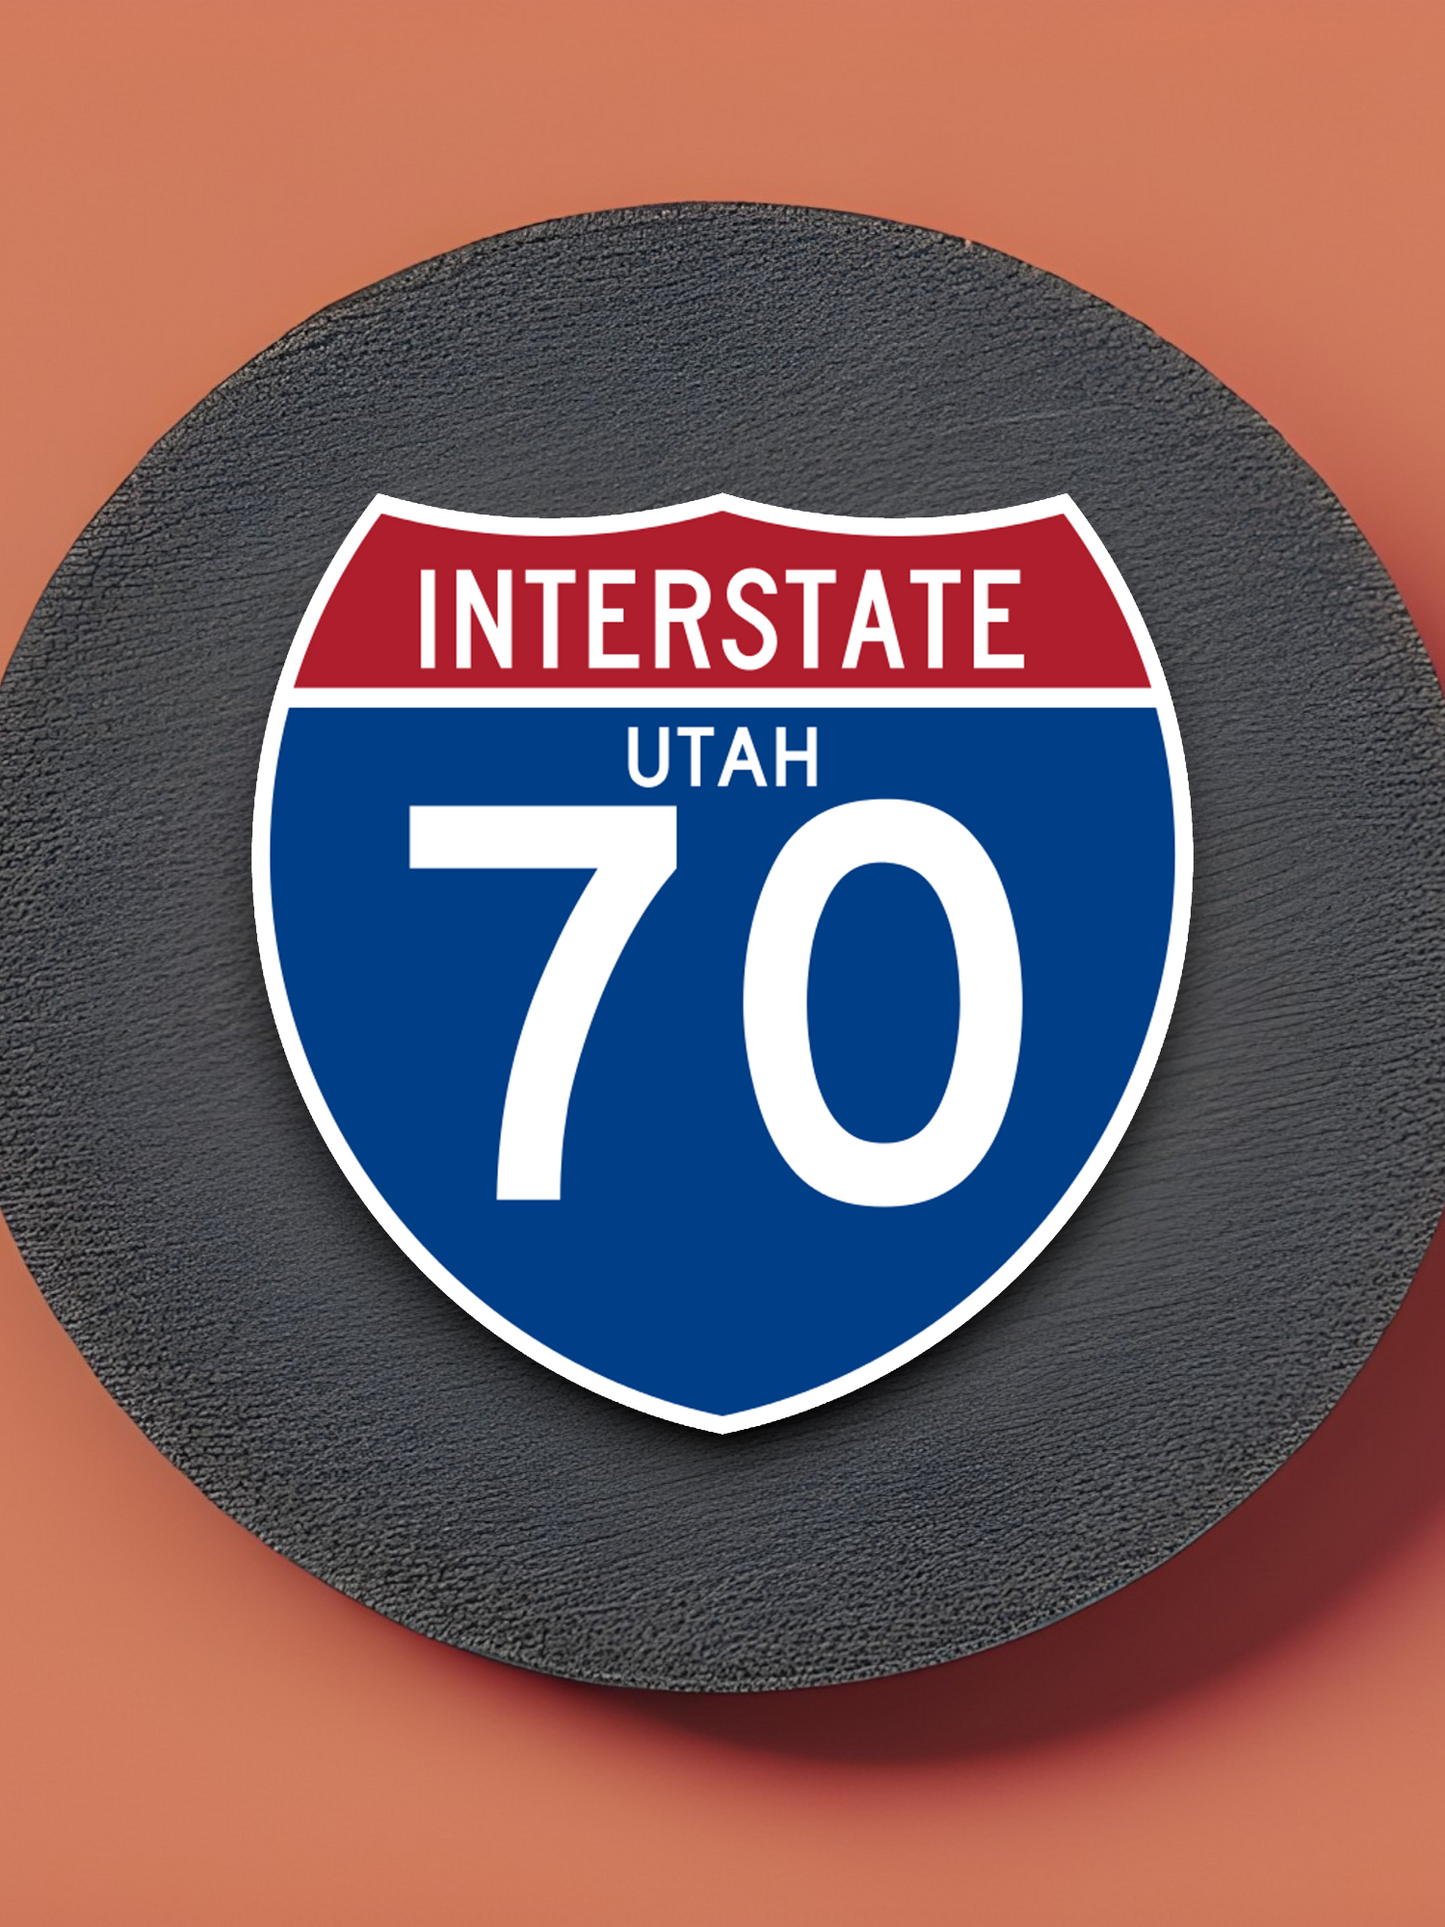 Interstate I-70 Utah - Road Sign Sticker